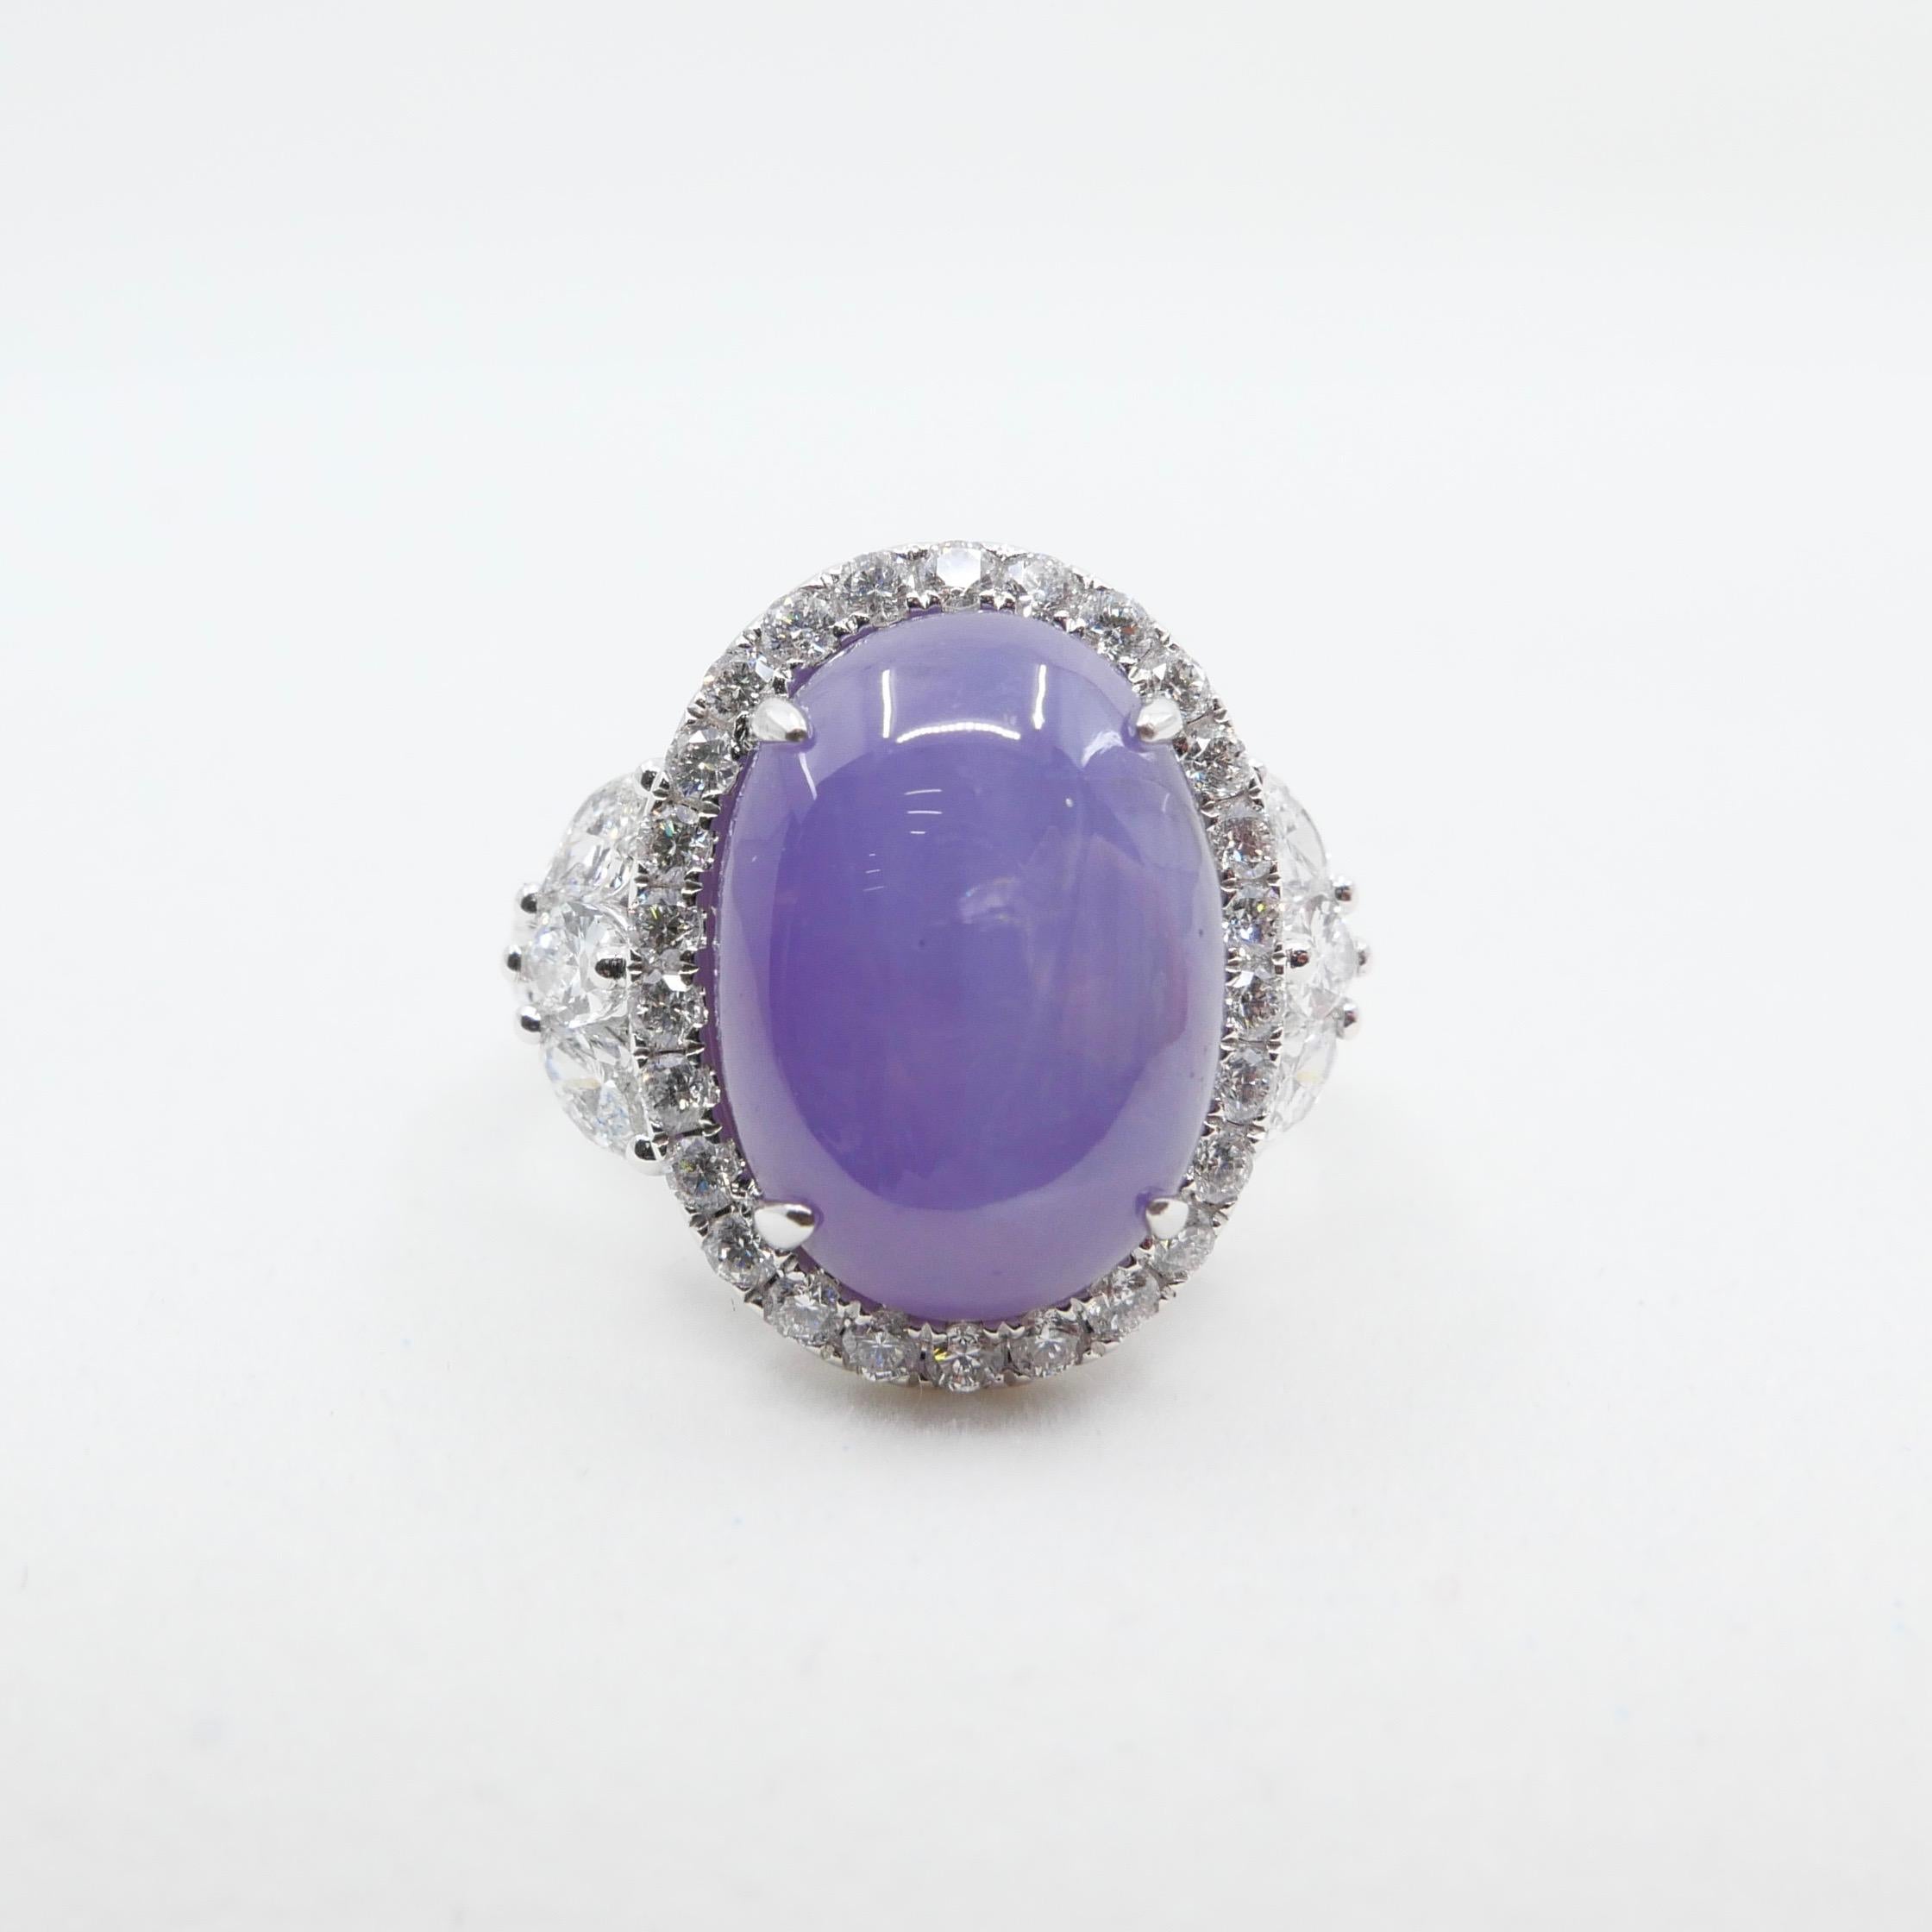 Certified Purple Star Sapphire 20.70 Carat Diamond Cocktail Ring, Statement Ring 1